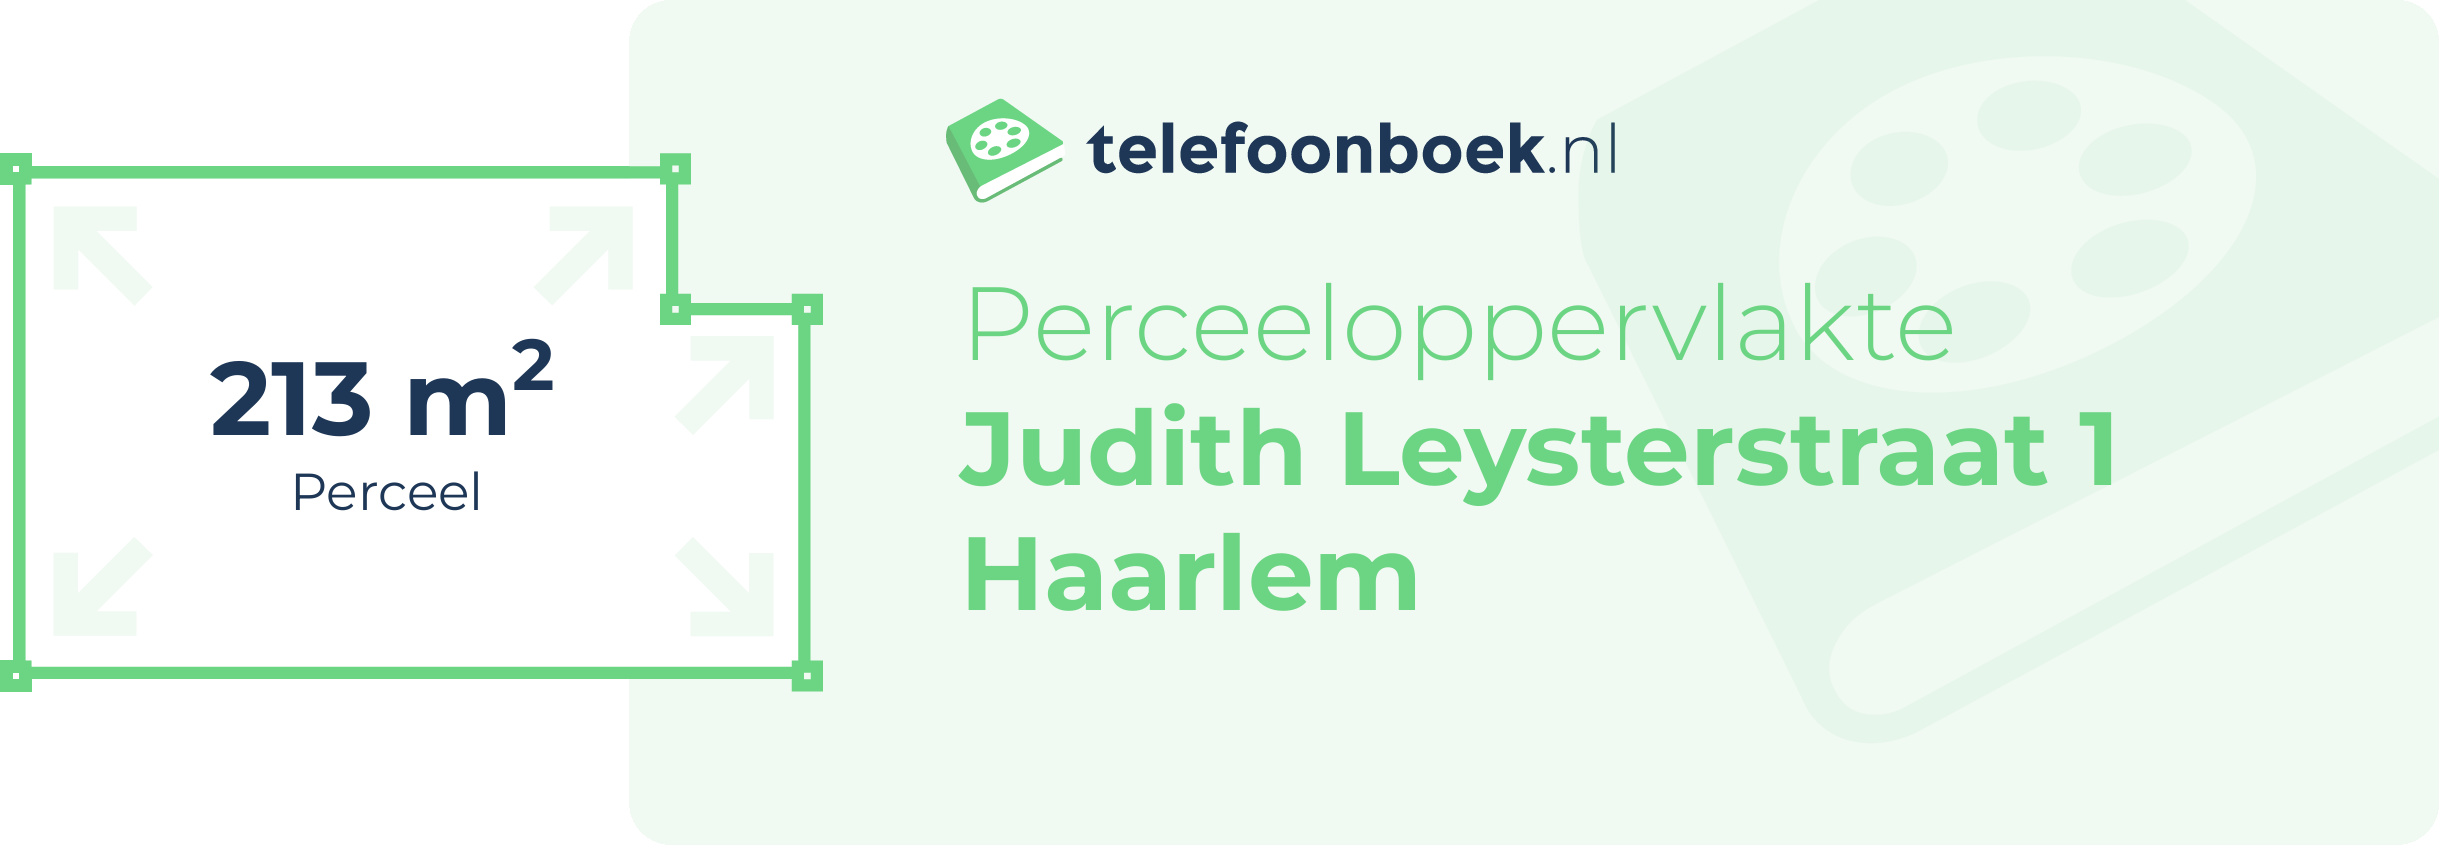 Perceeloppervlakte Judith Leysterstraat 1 Haarlem